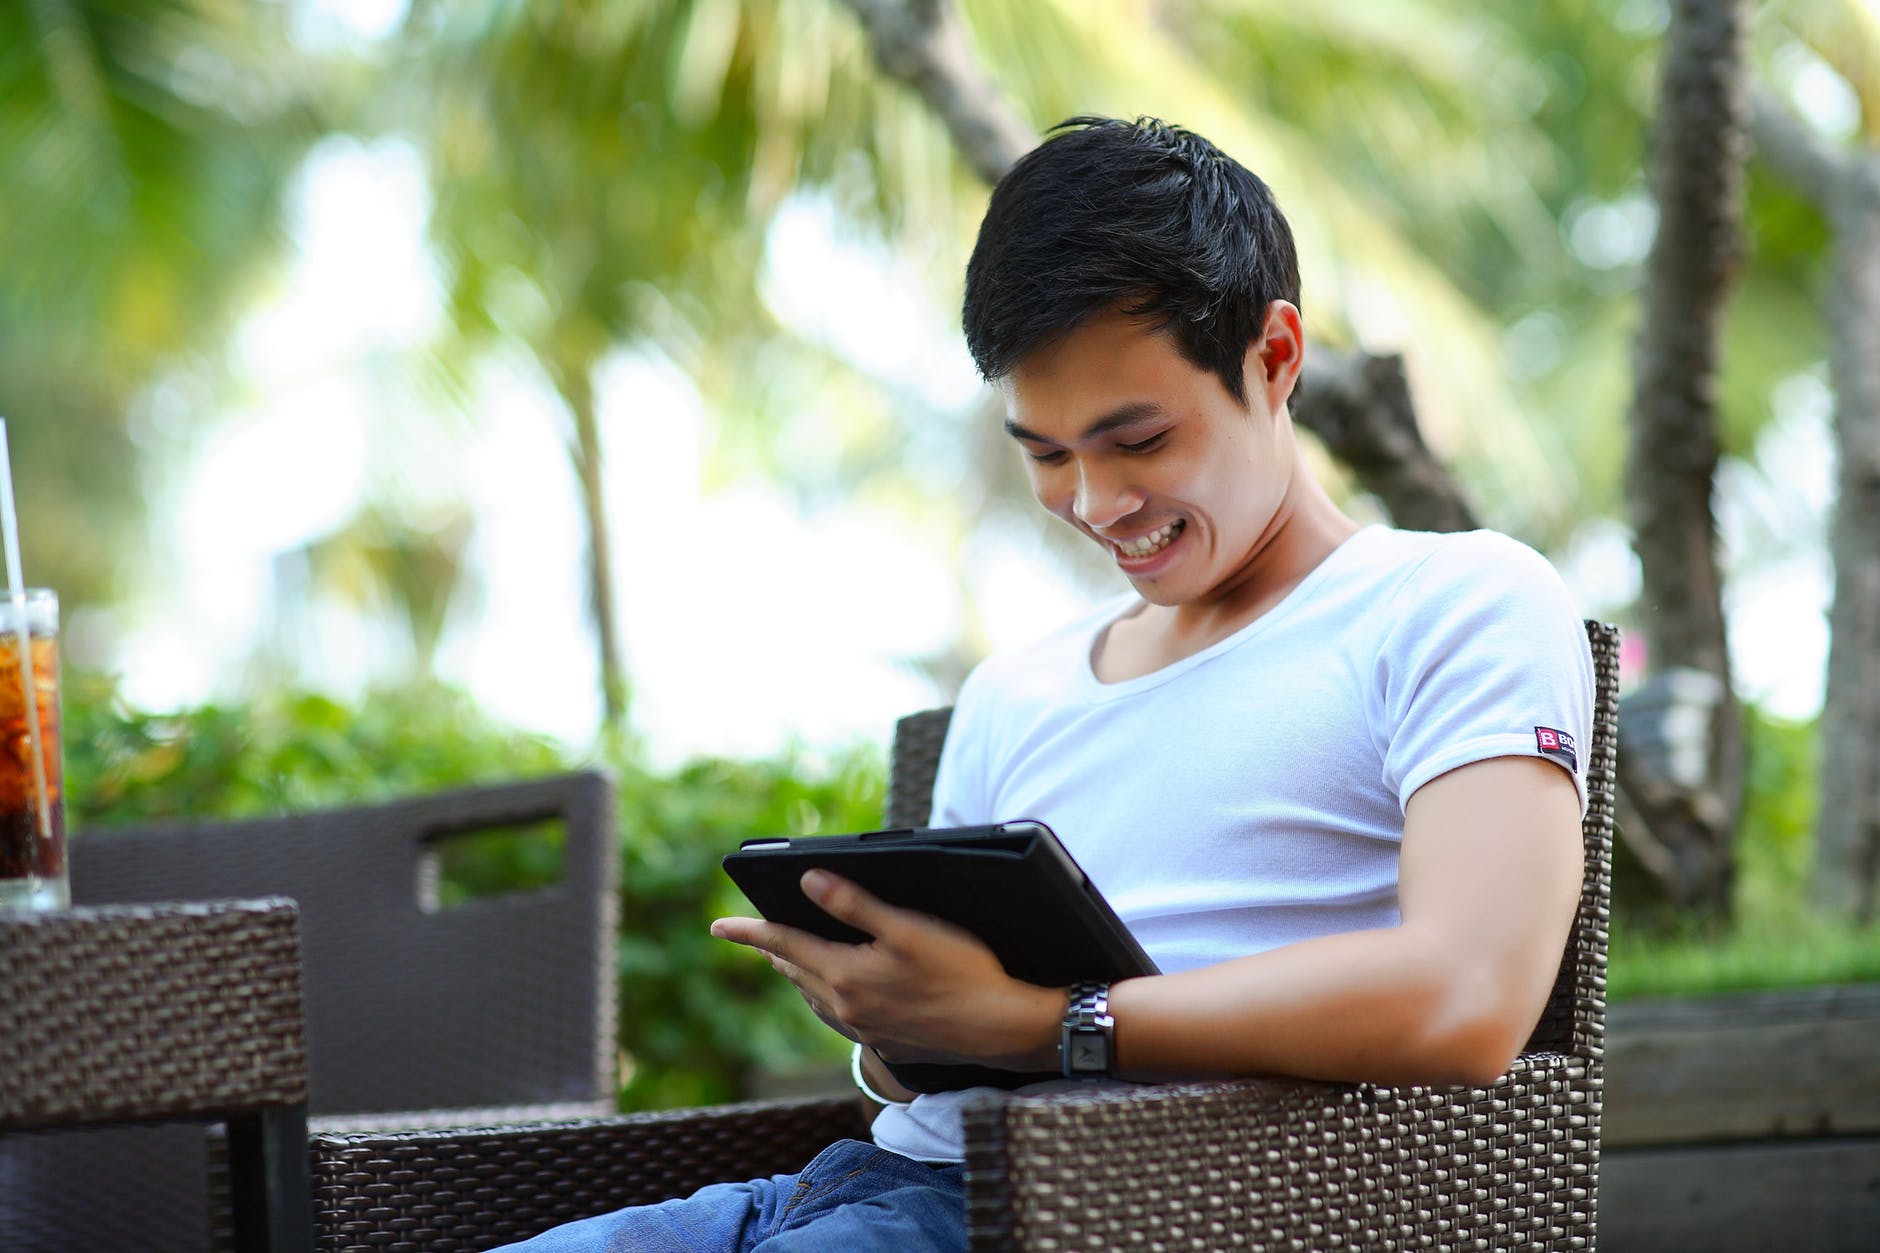 man sitting outside smiling at an iPad